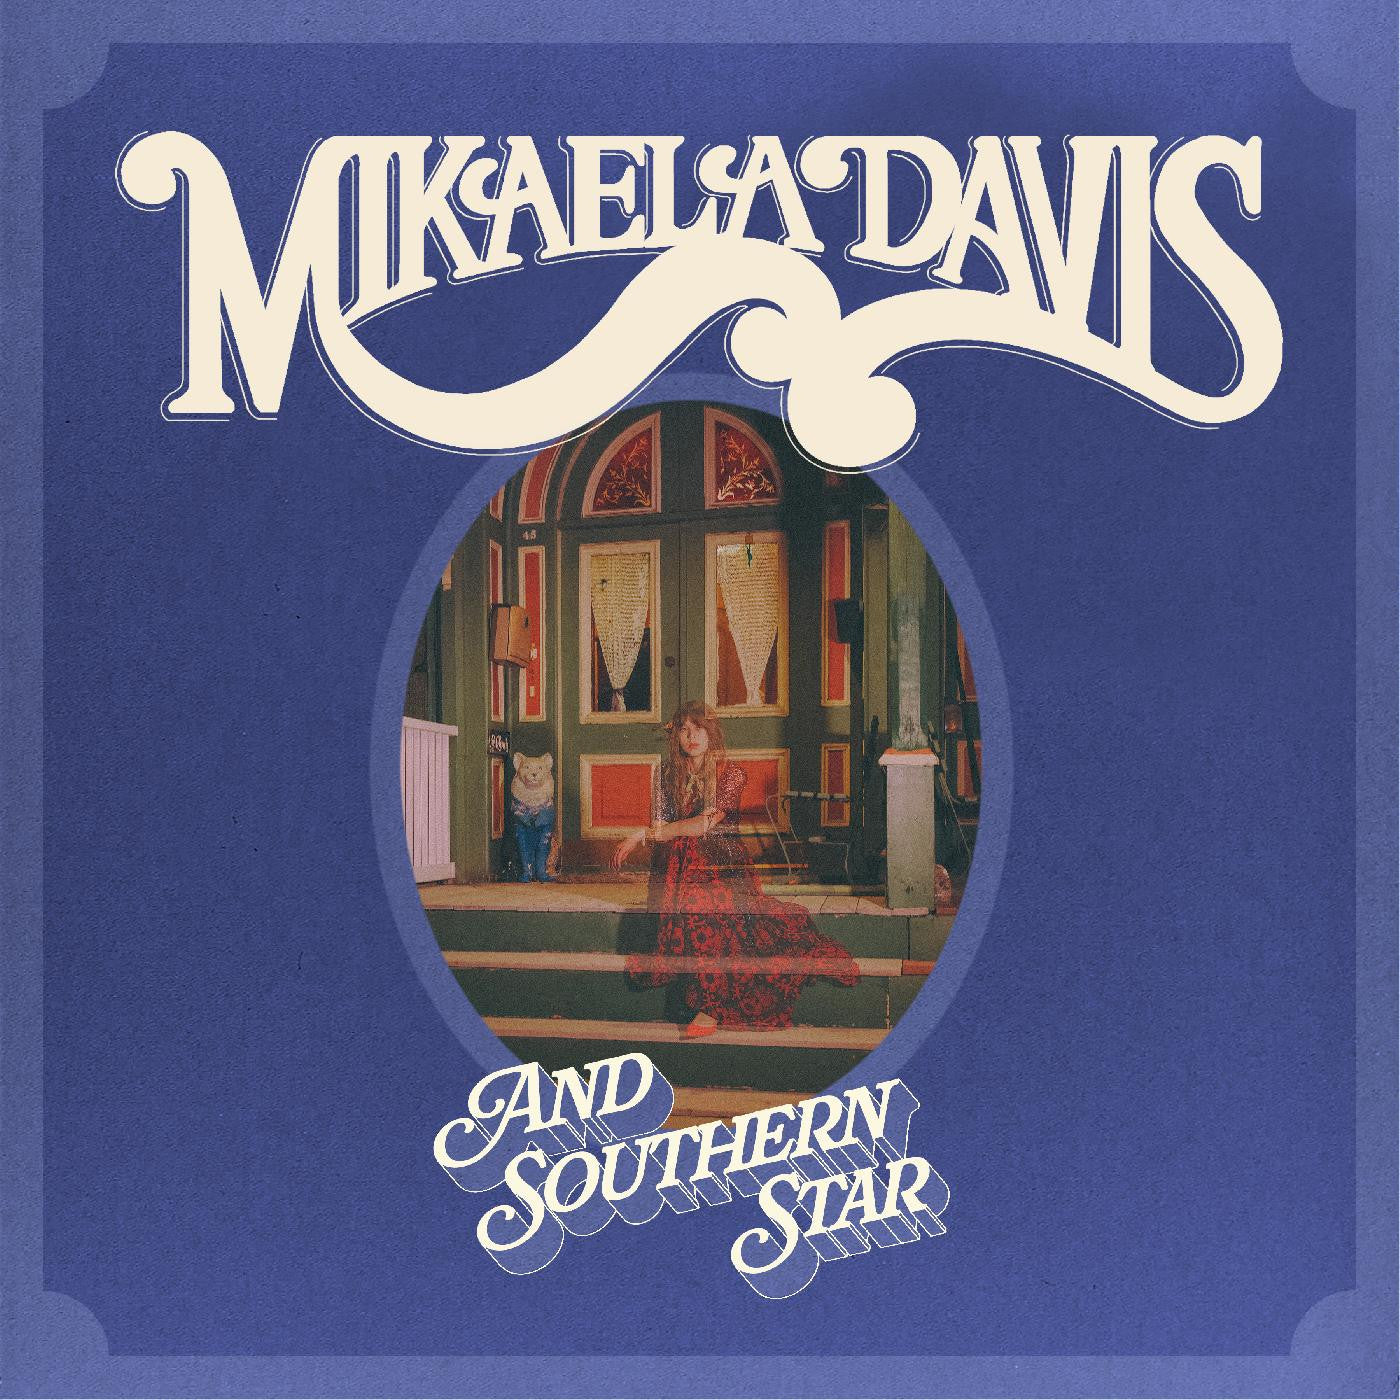 Mikaela Davis - And Southern Star (Vinyl LP)